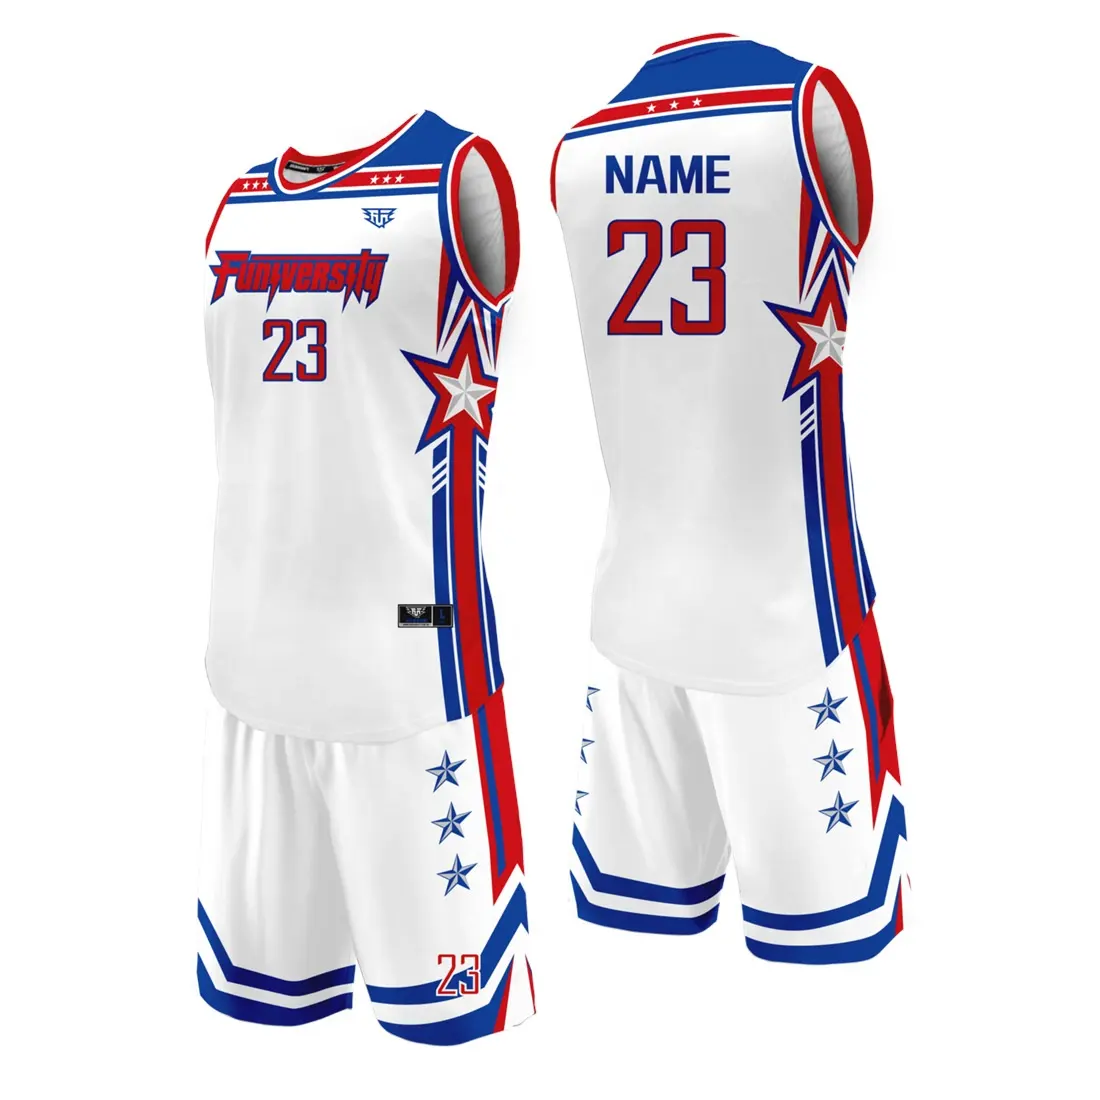 Oem Custom Quick Dry Basketball Wear Customize Design Sublimation Basketball Uniform Jerseys